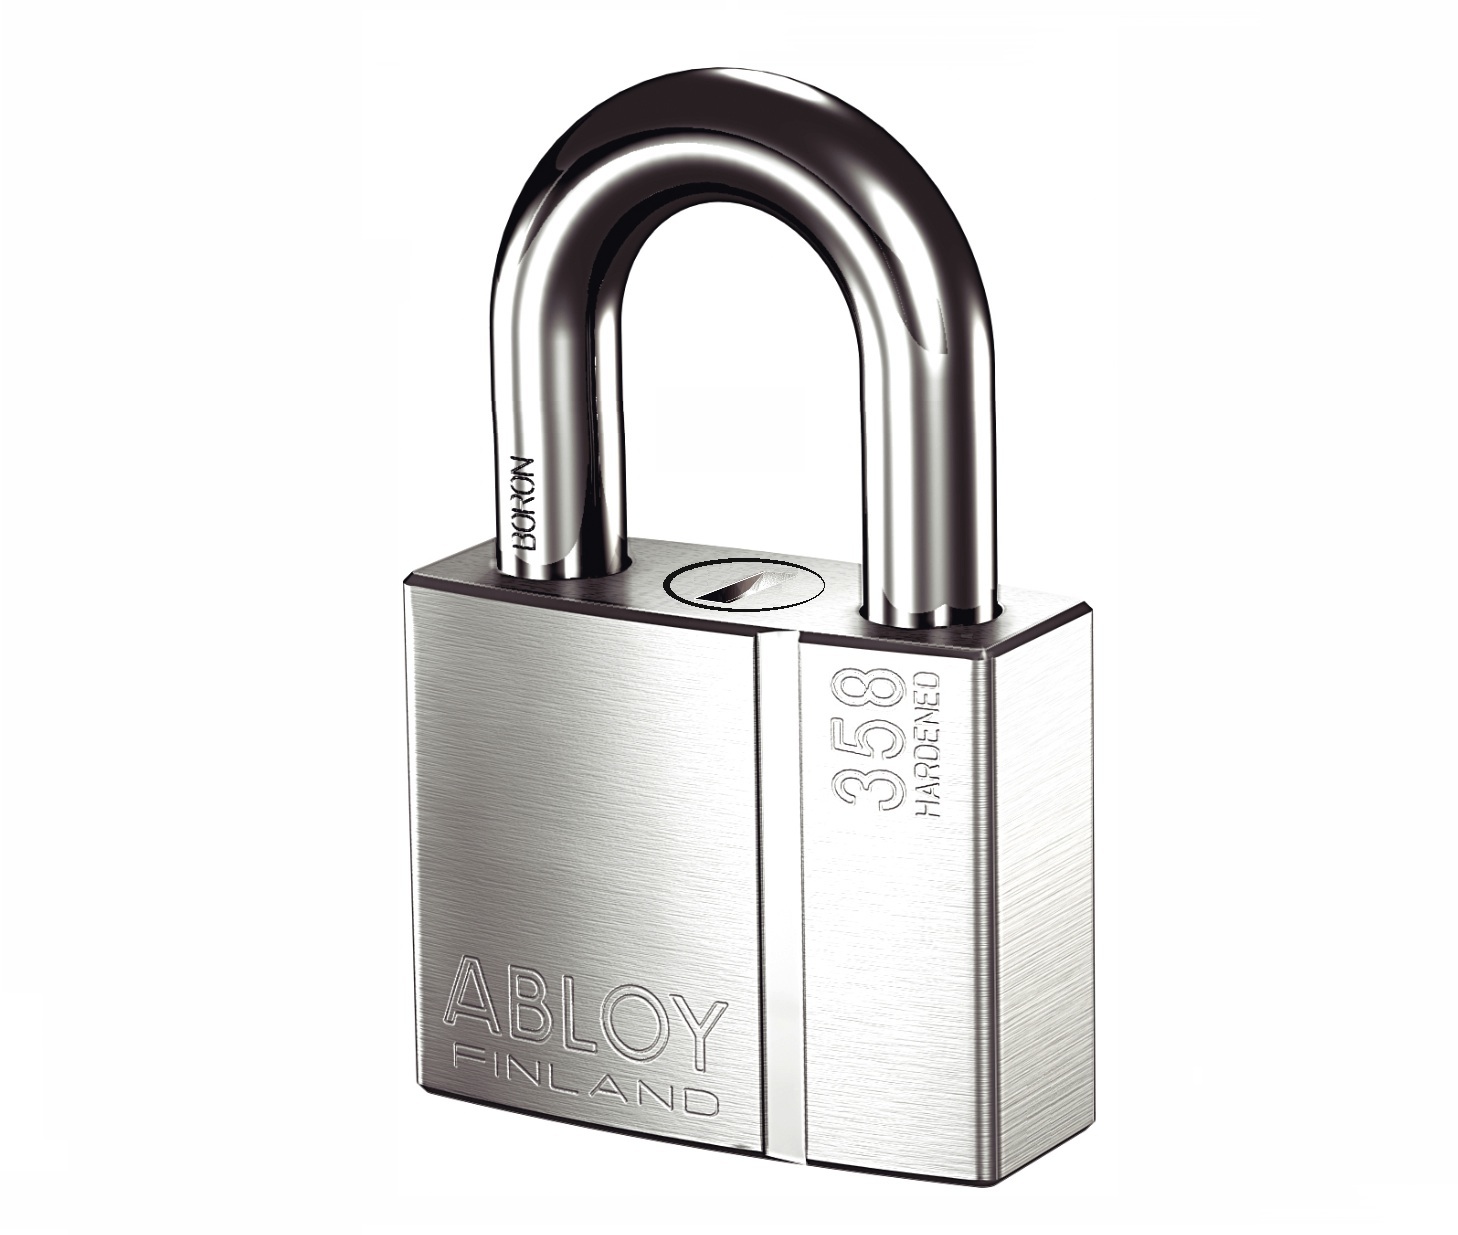 Assa Abloy Protec2 PL358 met losse beugel vanaf €148,00 - Containerslot.net %